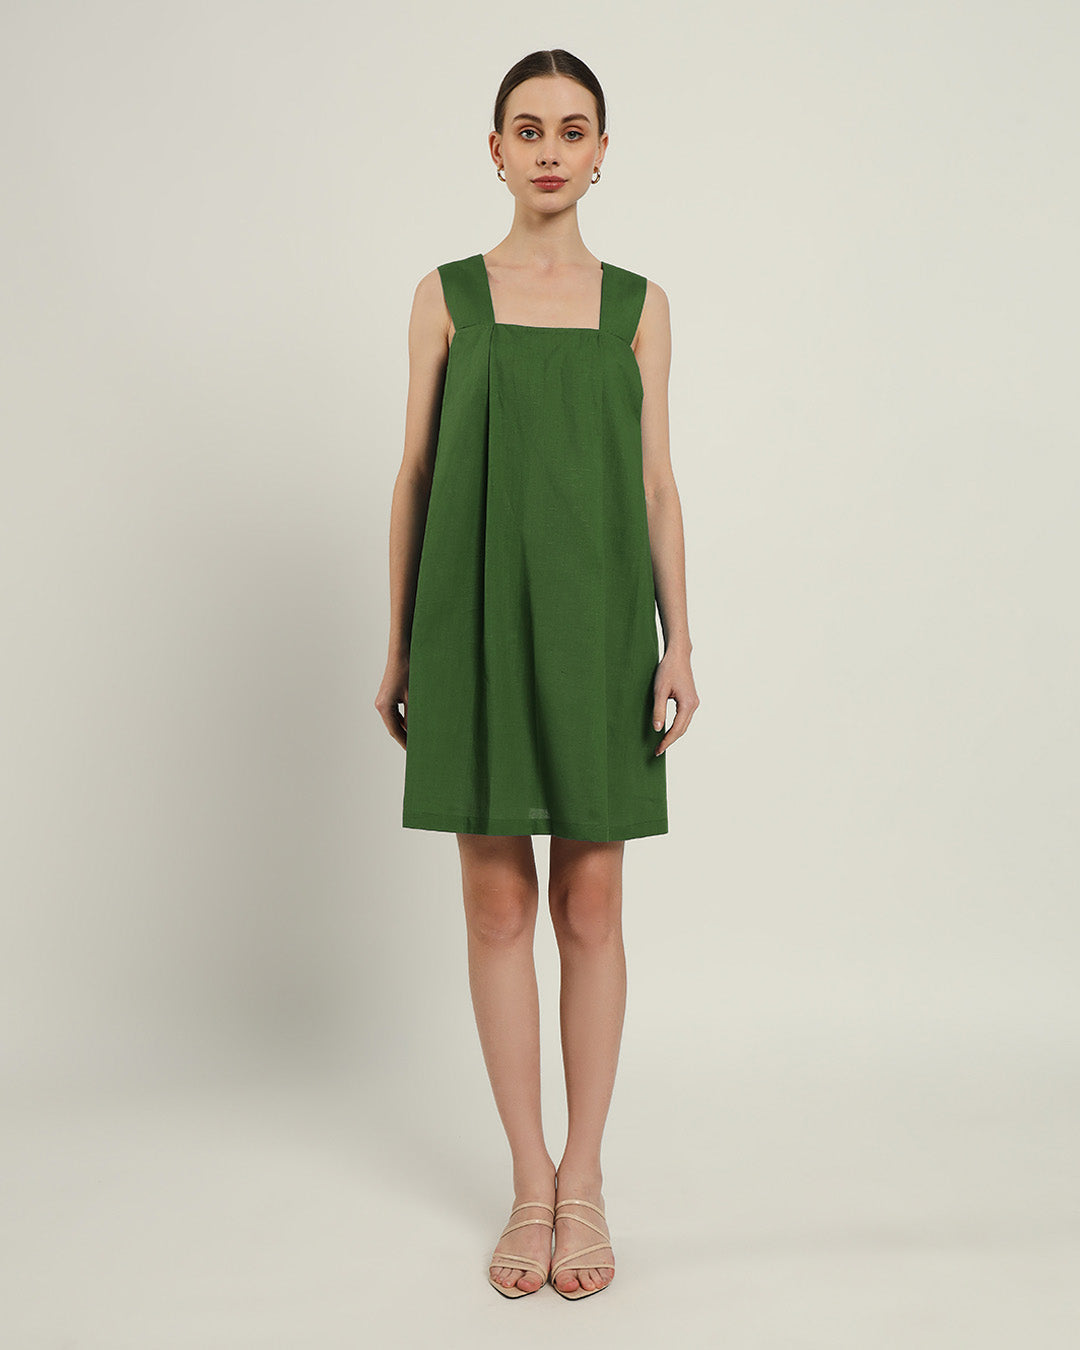 The Larissa Emerald Dress